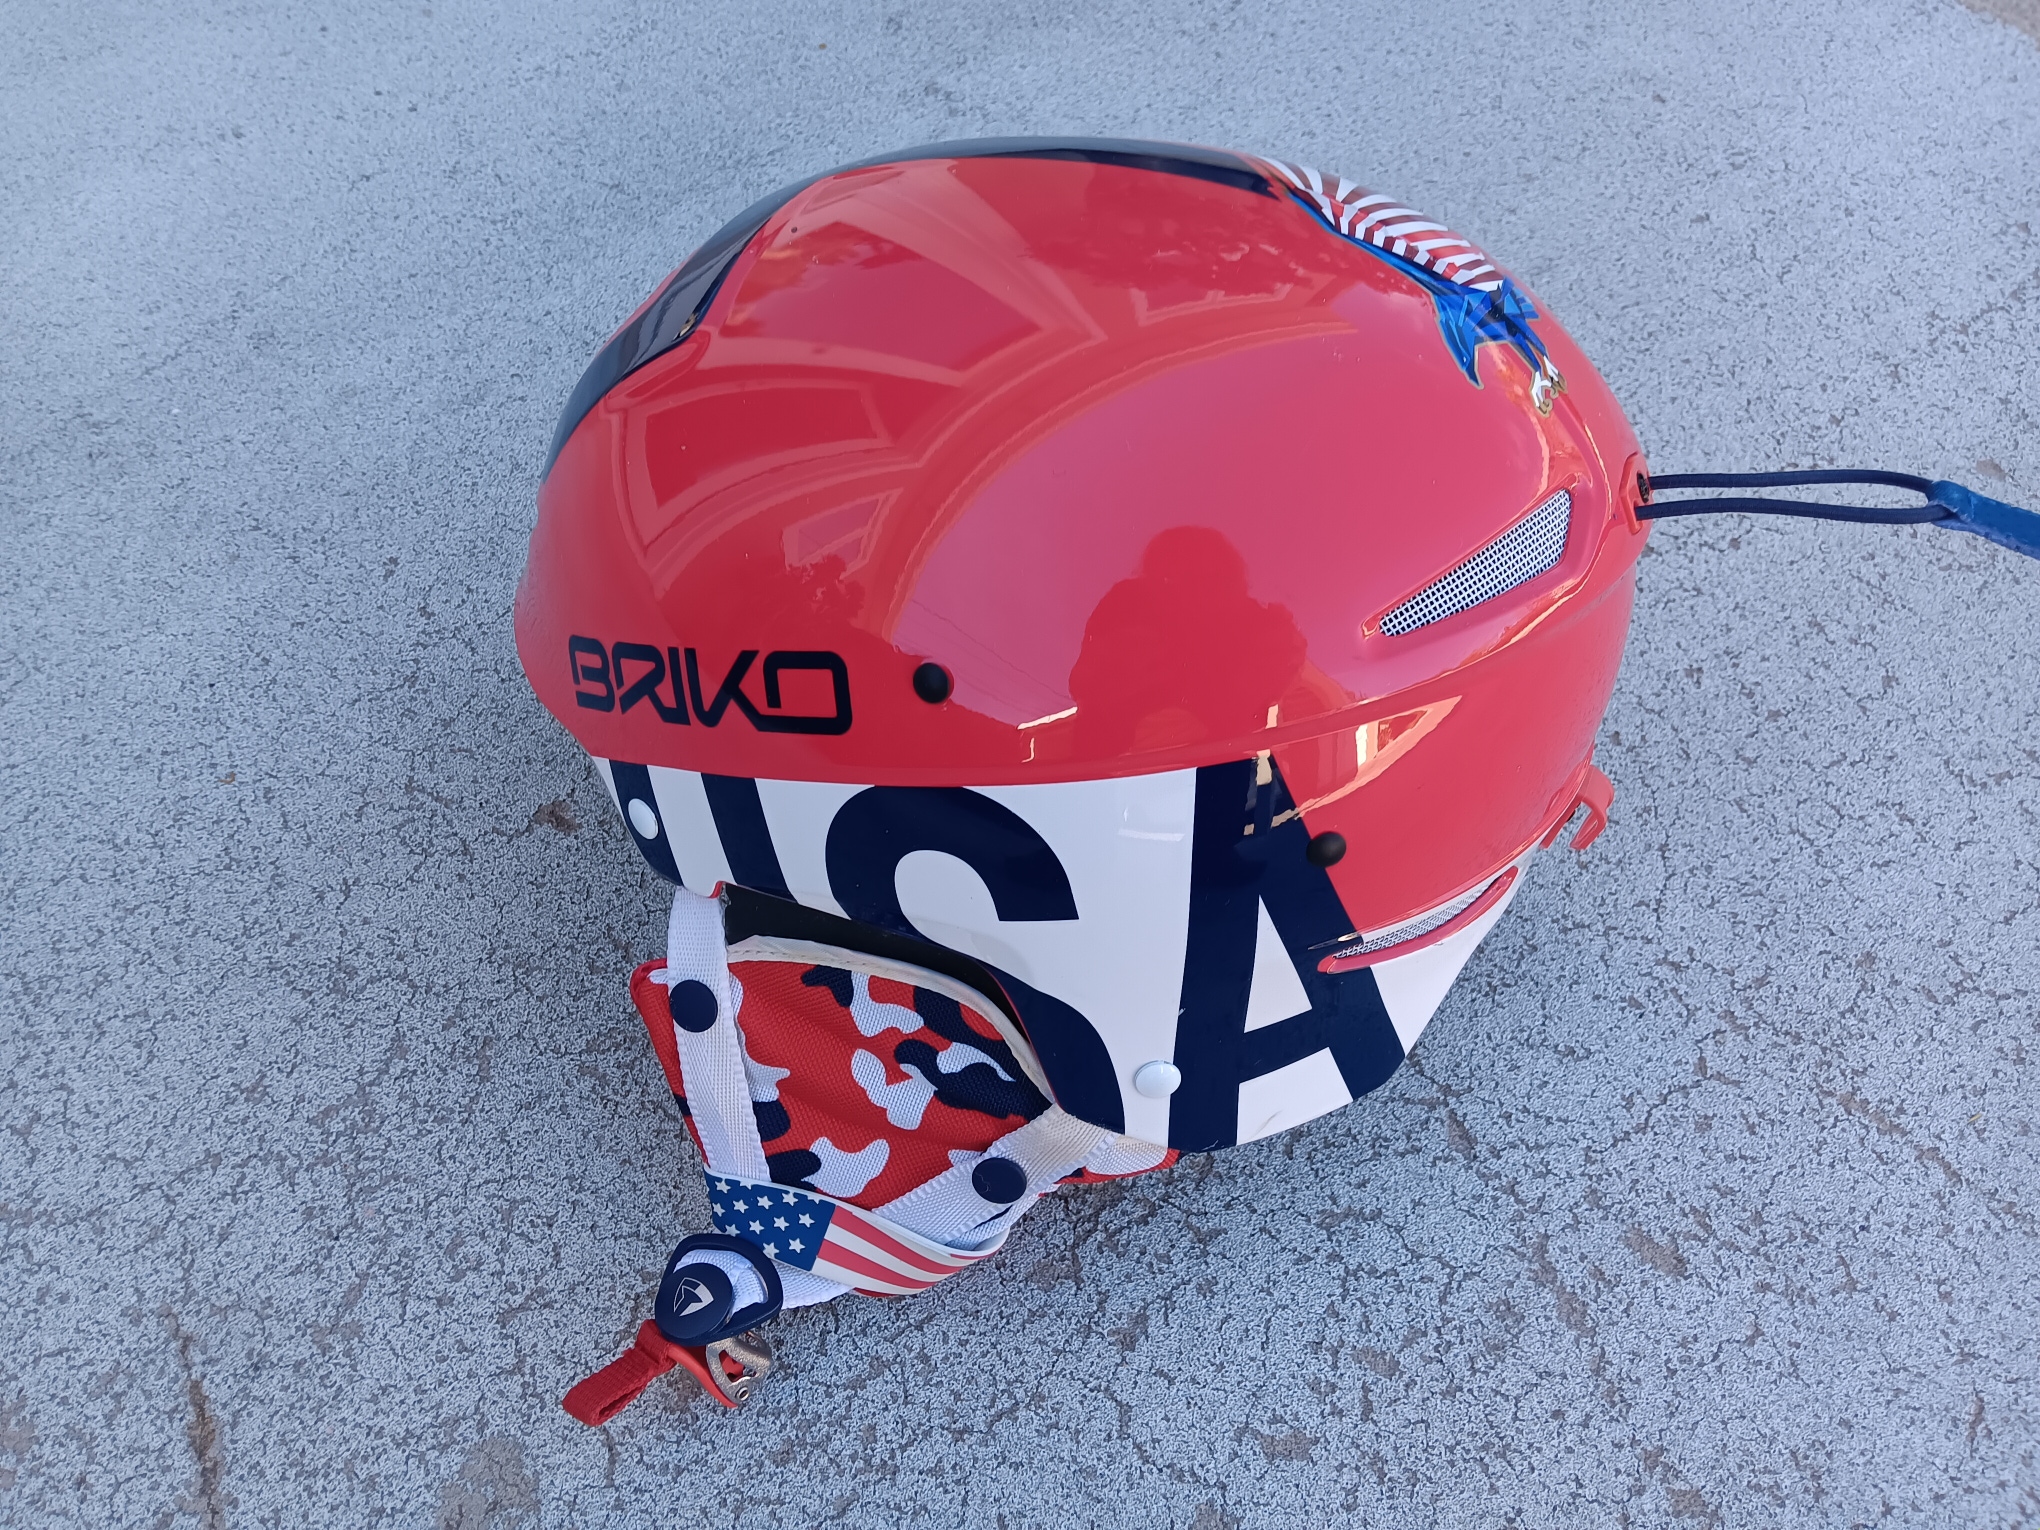 Briko USA Slalom Helmet | Model 8VSW-08 Size:64 | Red White Blue Eagle Flag Camo